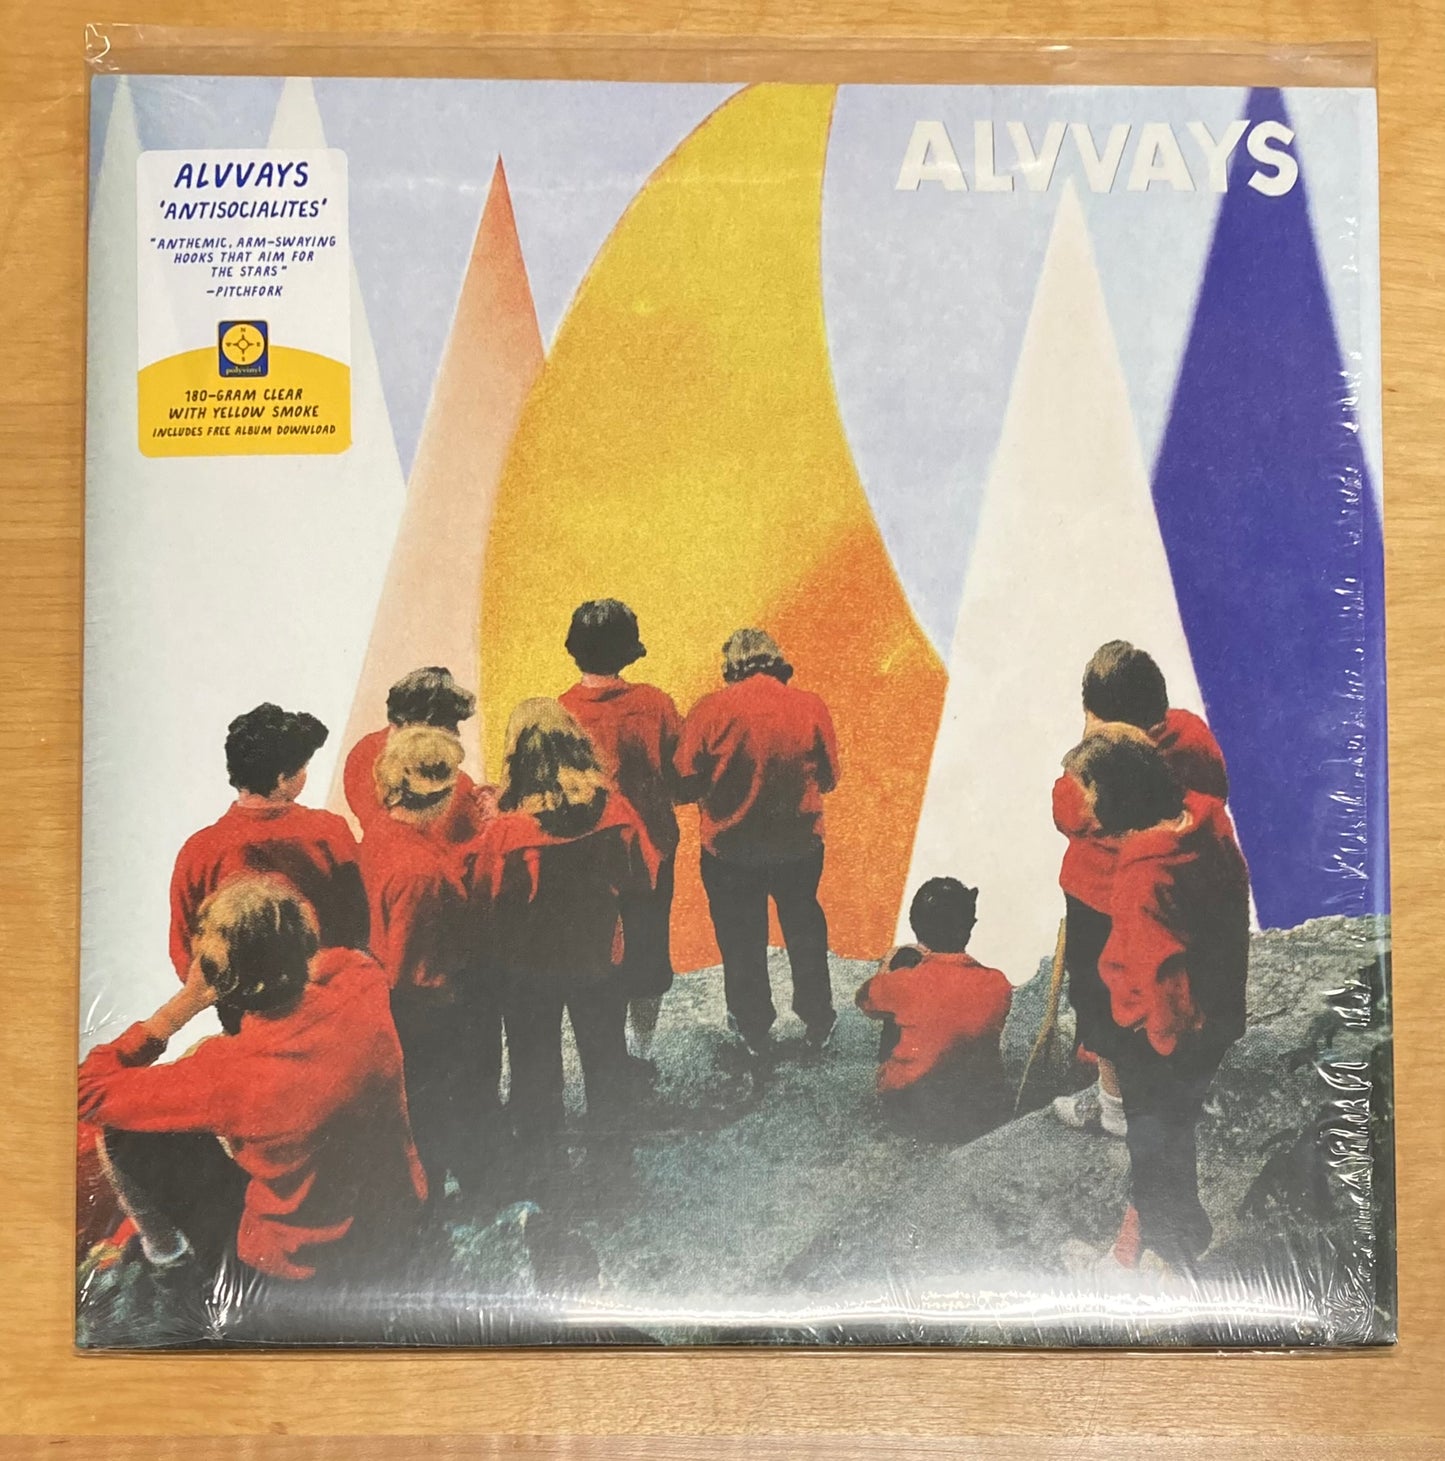 Antisocialites - Alvvays *Sealed, 180-Gram, Color Vinyl, Album Download, Hype Sticker*